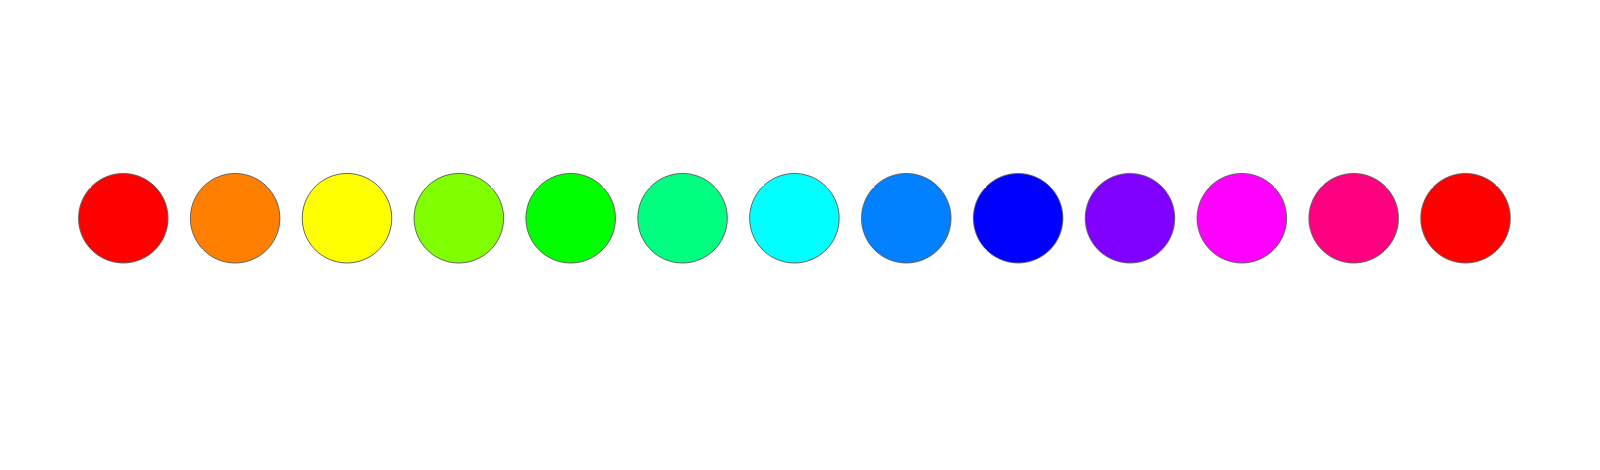 ../_images/basics.colors_color-circle.png